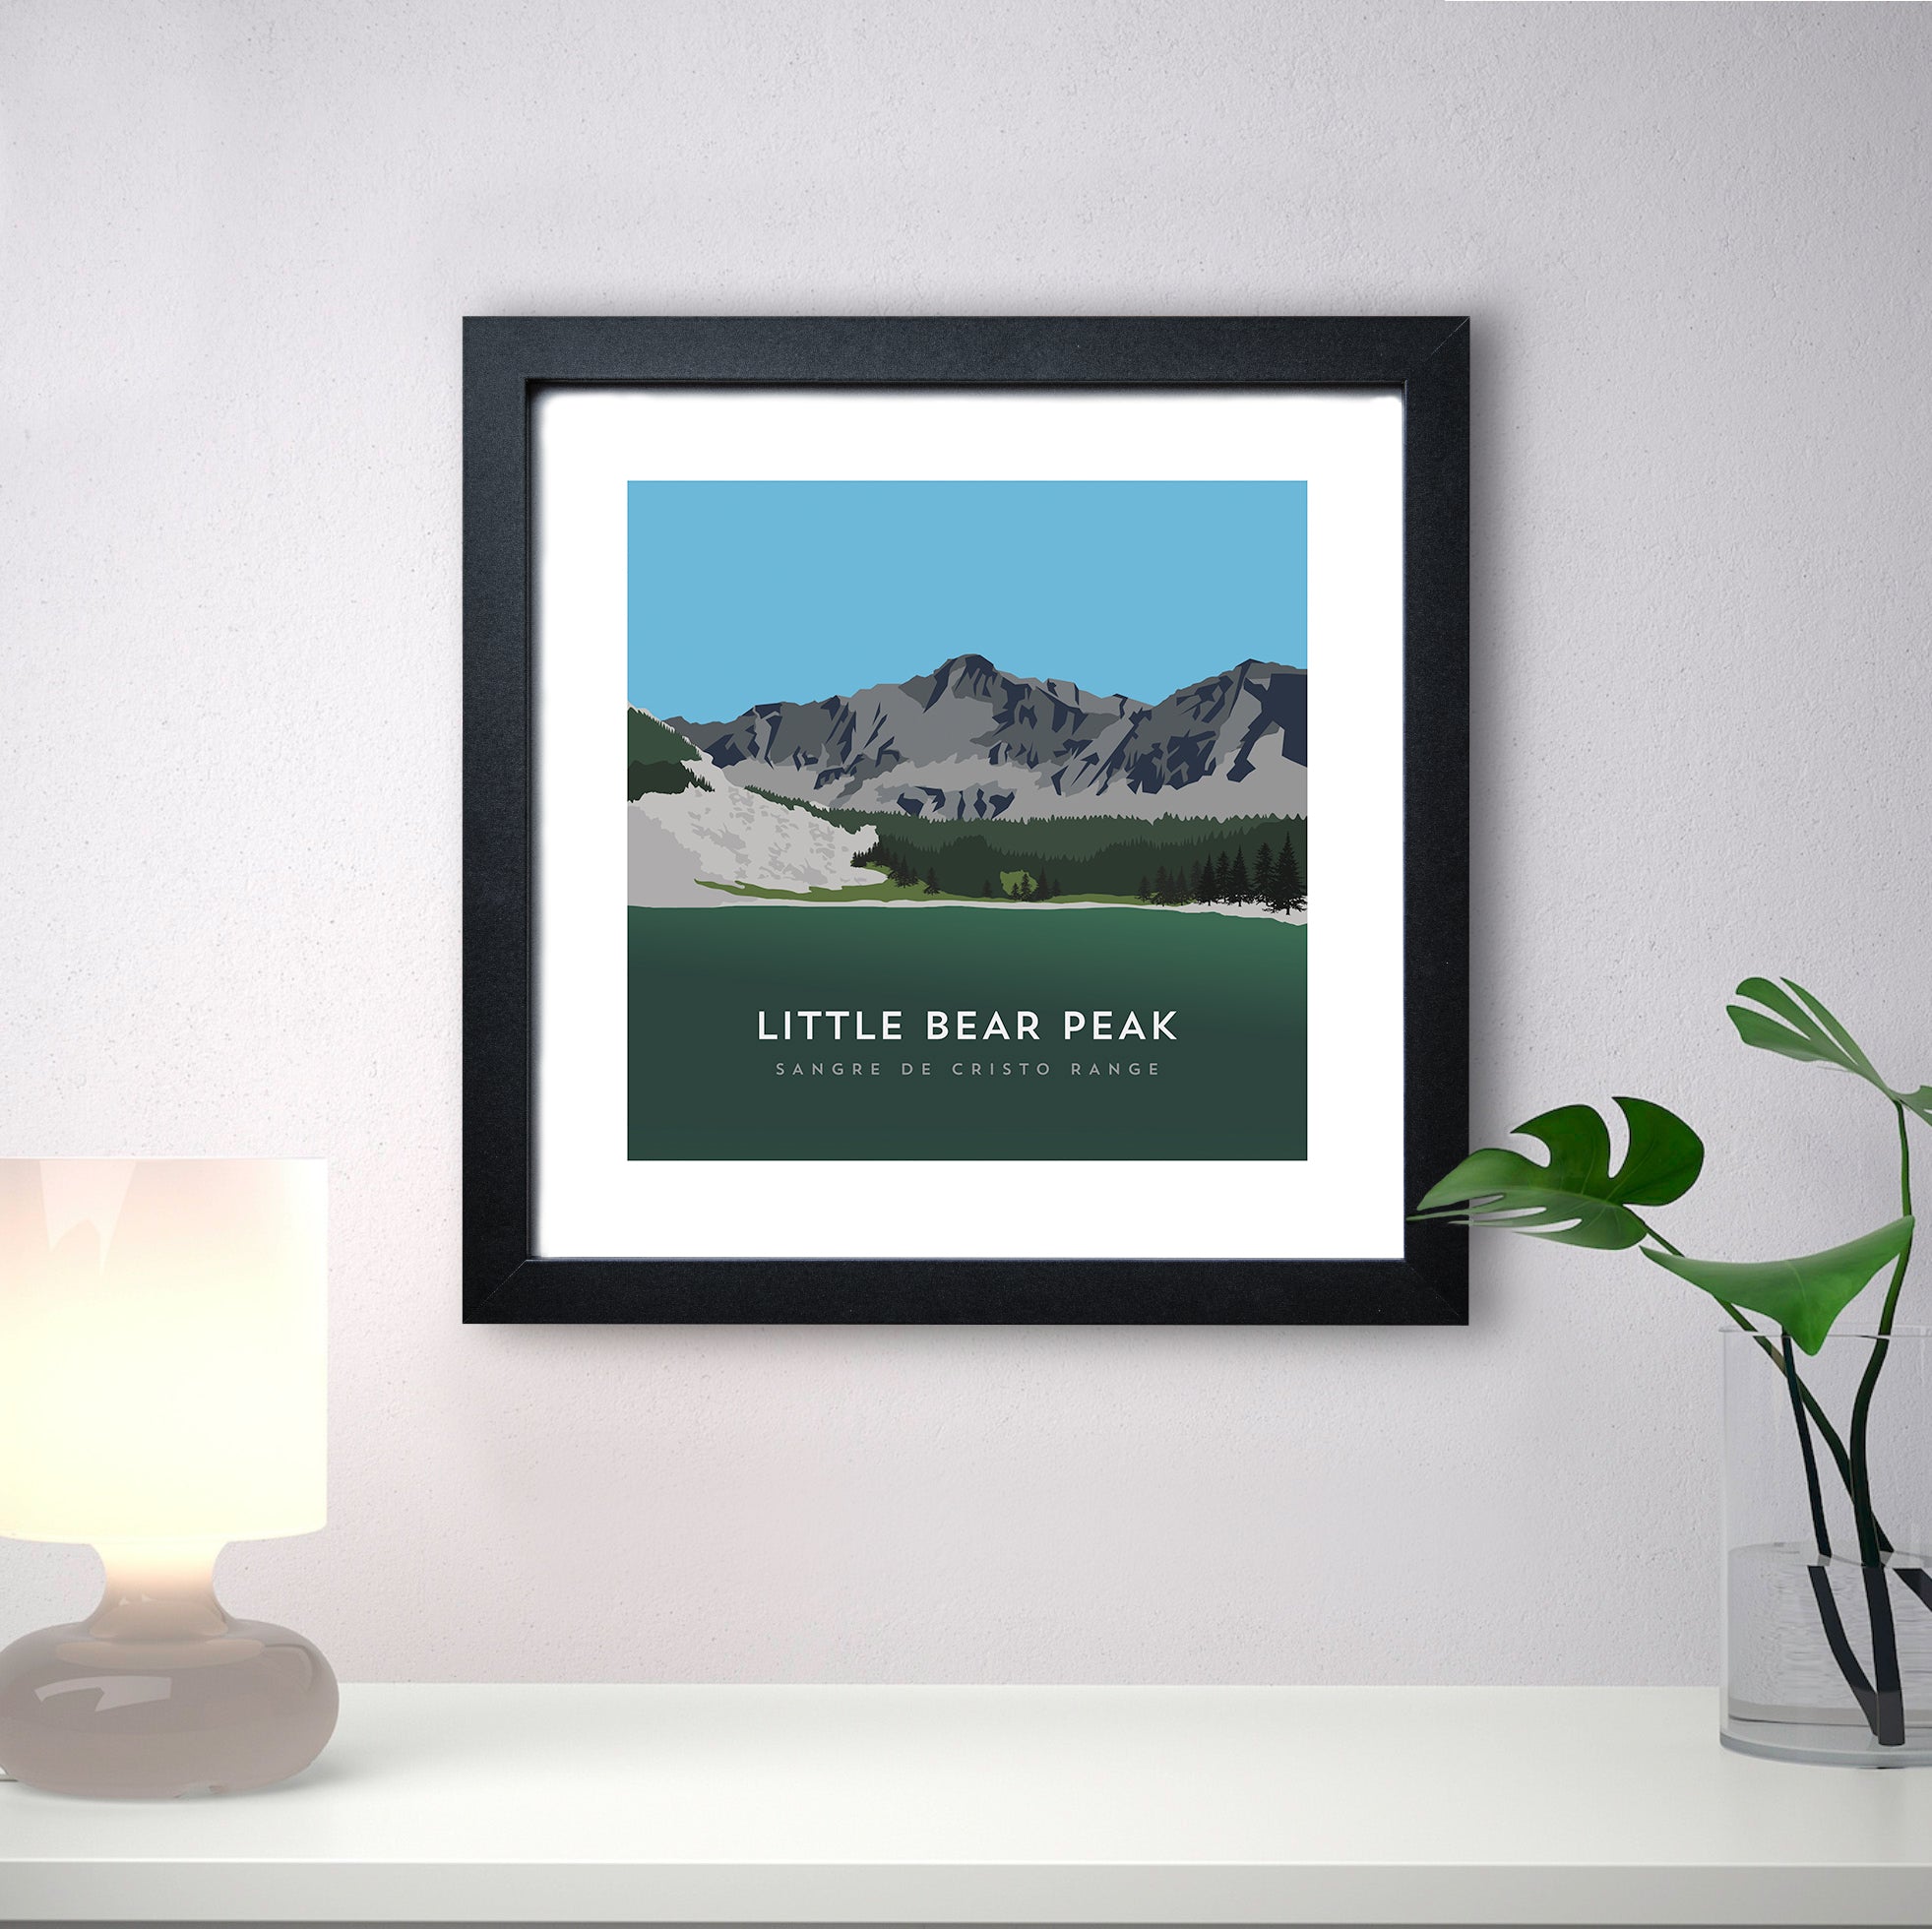 Little Bear Peak Colorado 14er Print